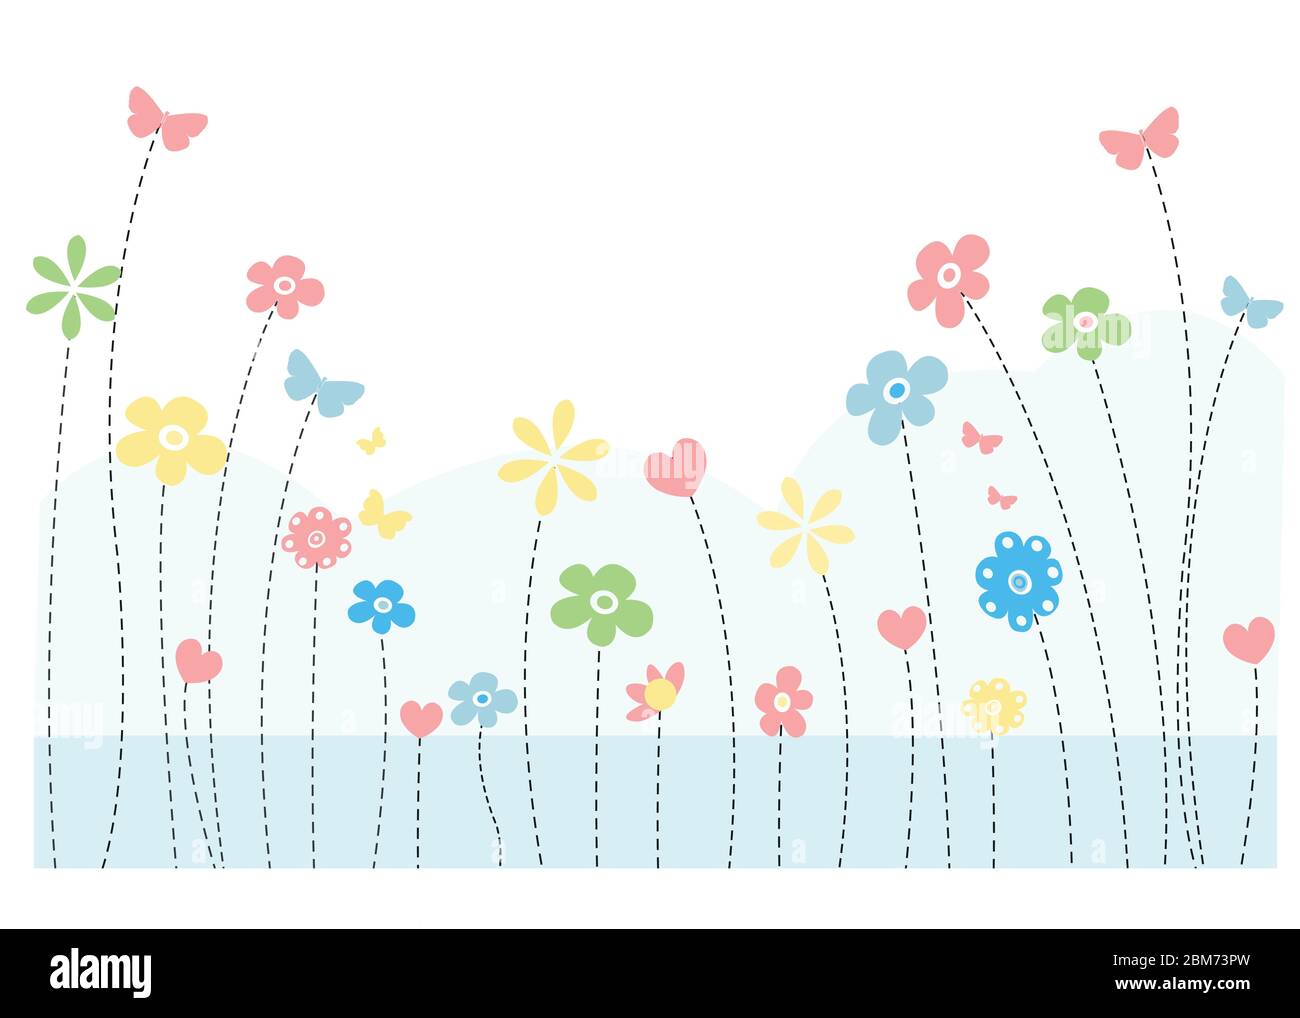 simple flower border designs